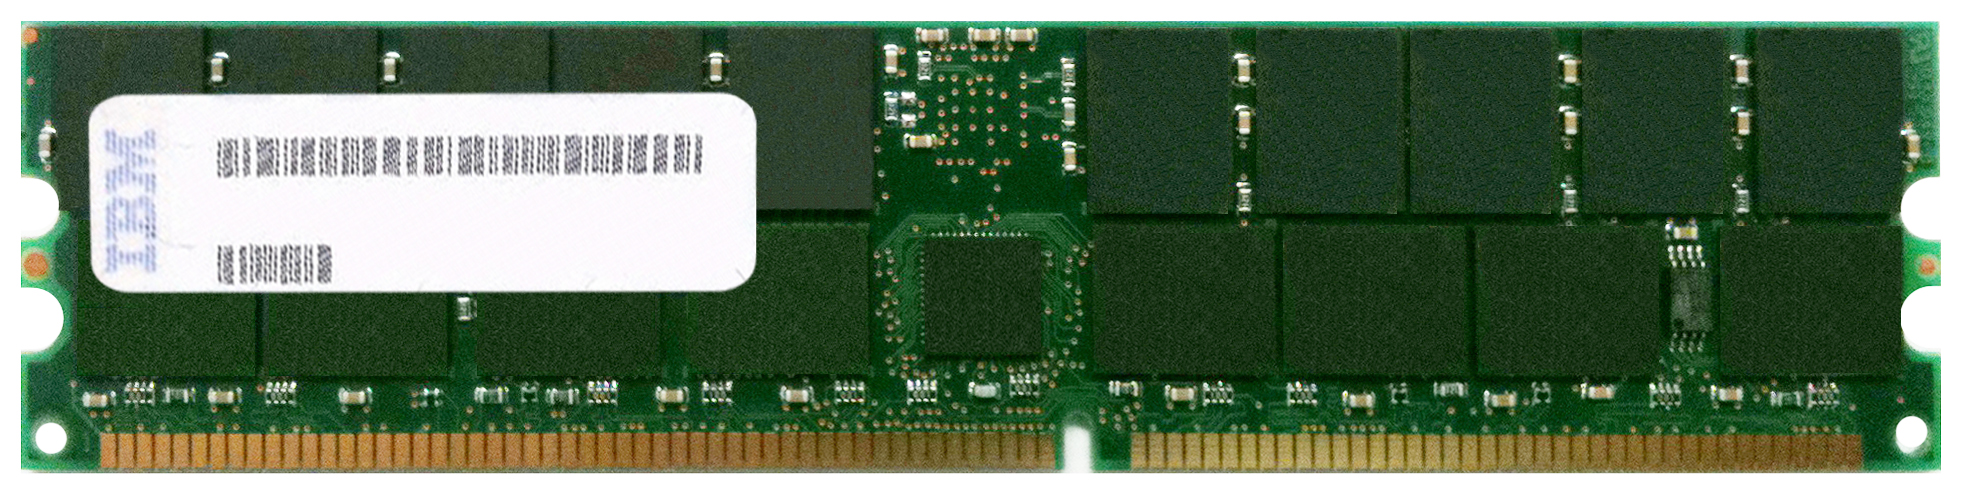 53P4454 IBM 2GB PC2100 DDR-266MHz CL2.5 DIMM Memory Module